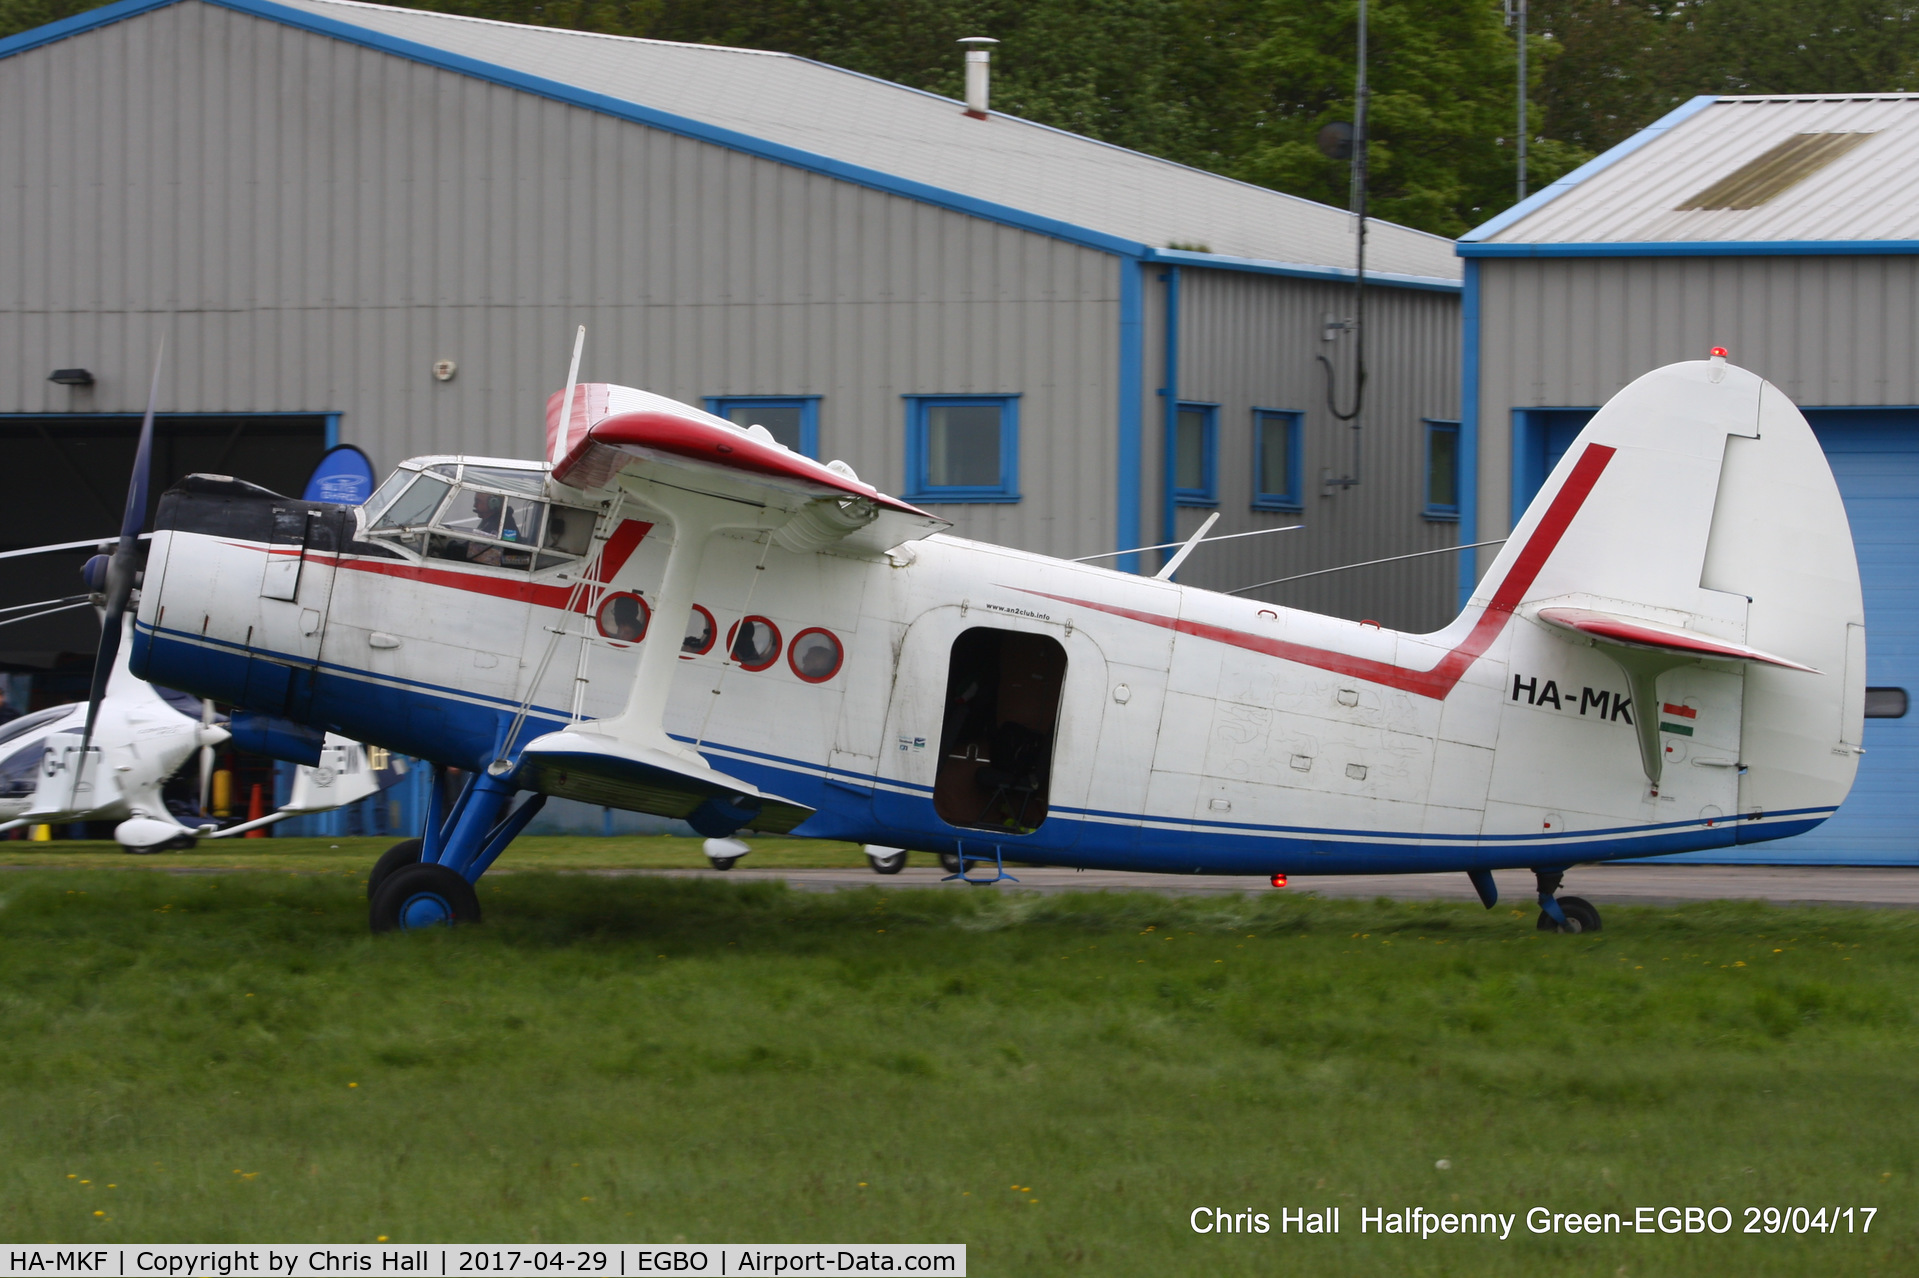 HA-MKF, 1985 Antonov An-2TP C/N 1G233-43, at the Radial & Trainer fly-in